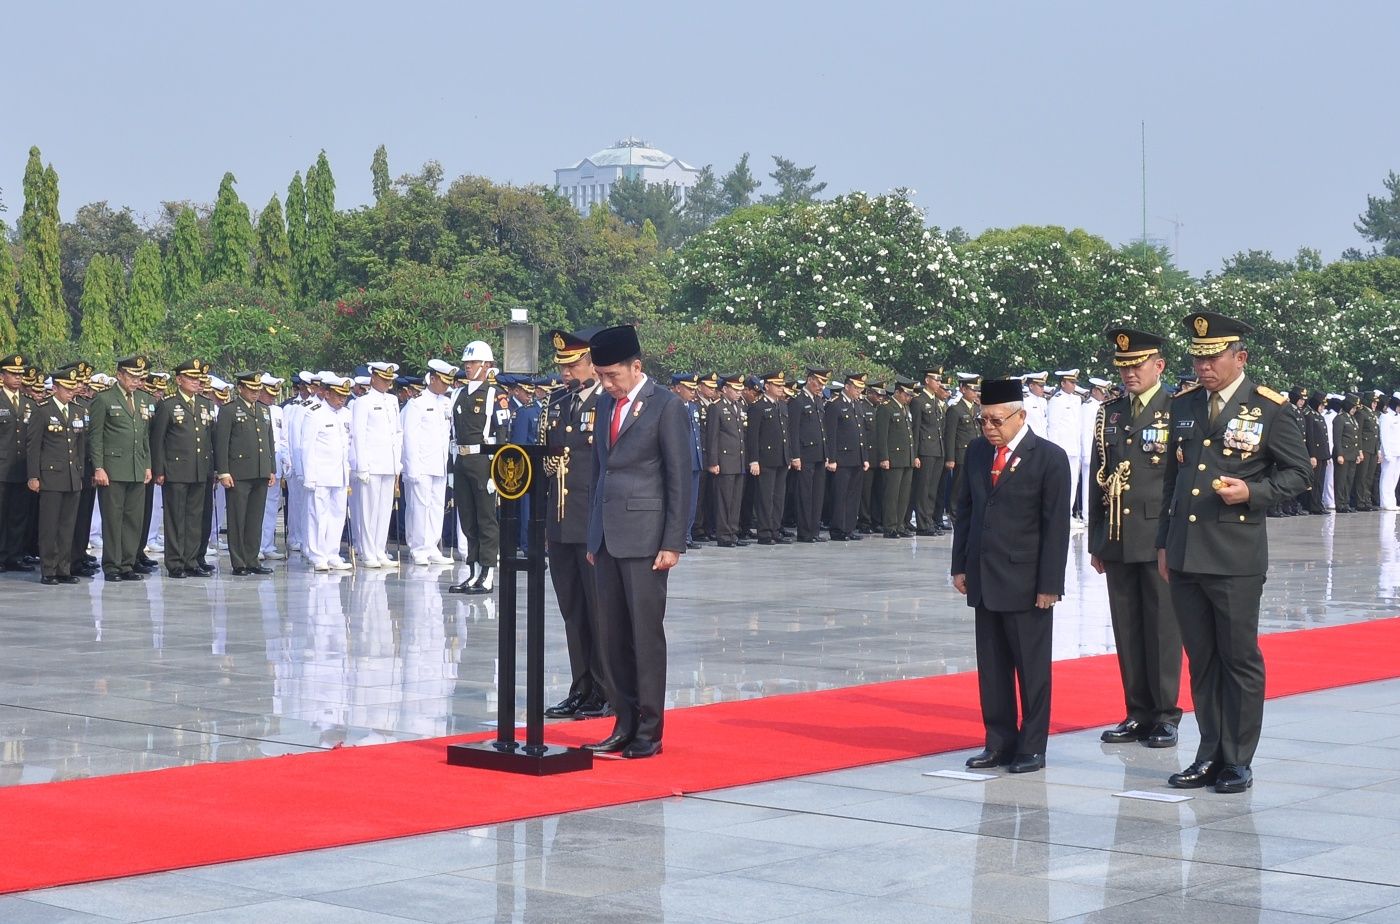 Presiden Jokowi: Kewajiban Kita Untuk Terus Mengisi Kemerdekaan Yang Diperjuangkan Pahlawan 